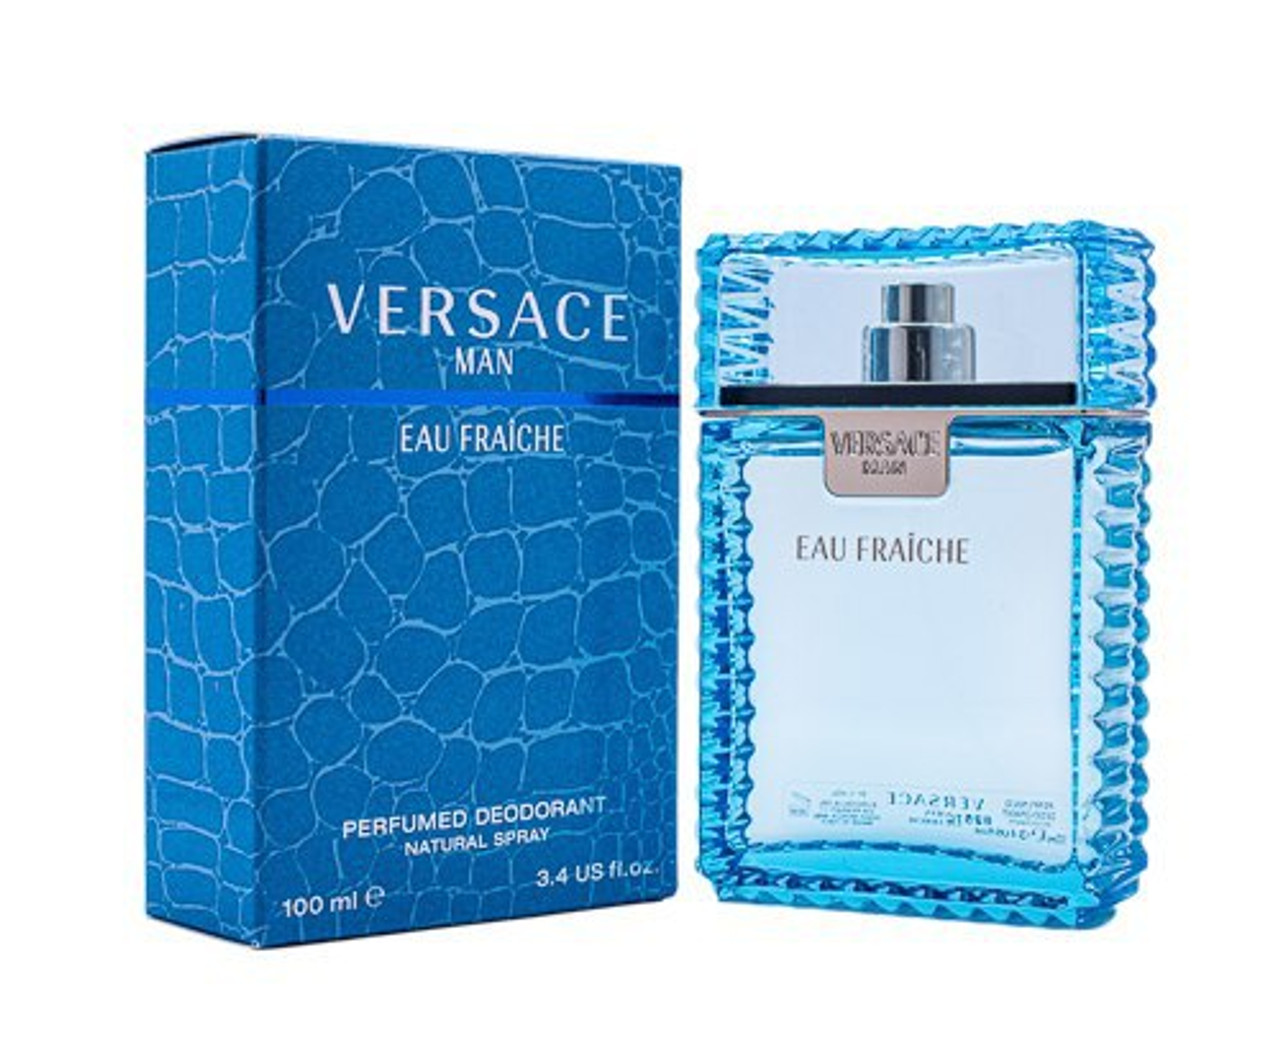 Versace Man EAU Fraiche by Versace 3.4 oz Perfumed Deodorant Spray -  ForeverLux